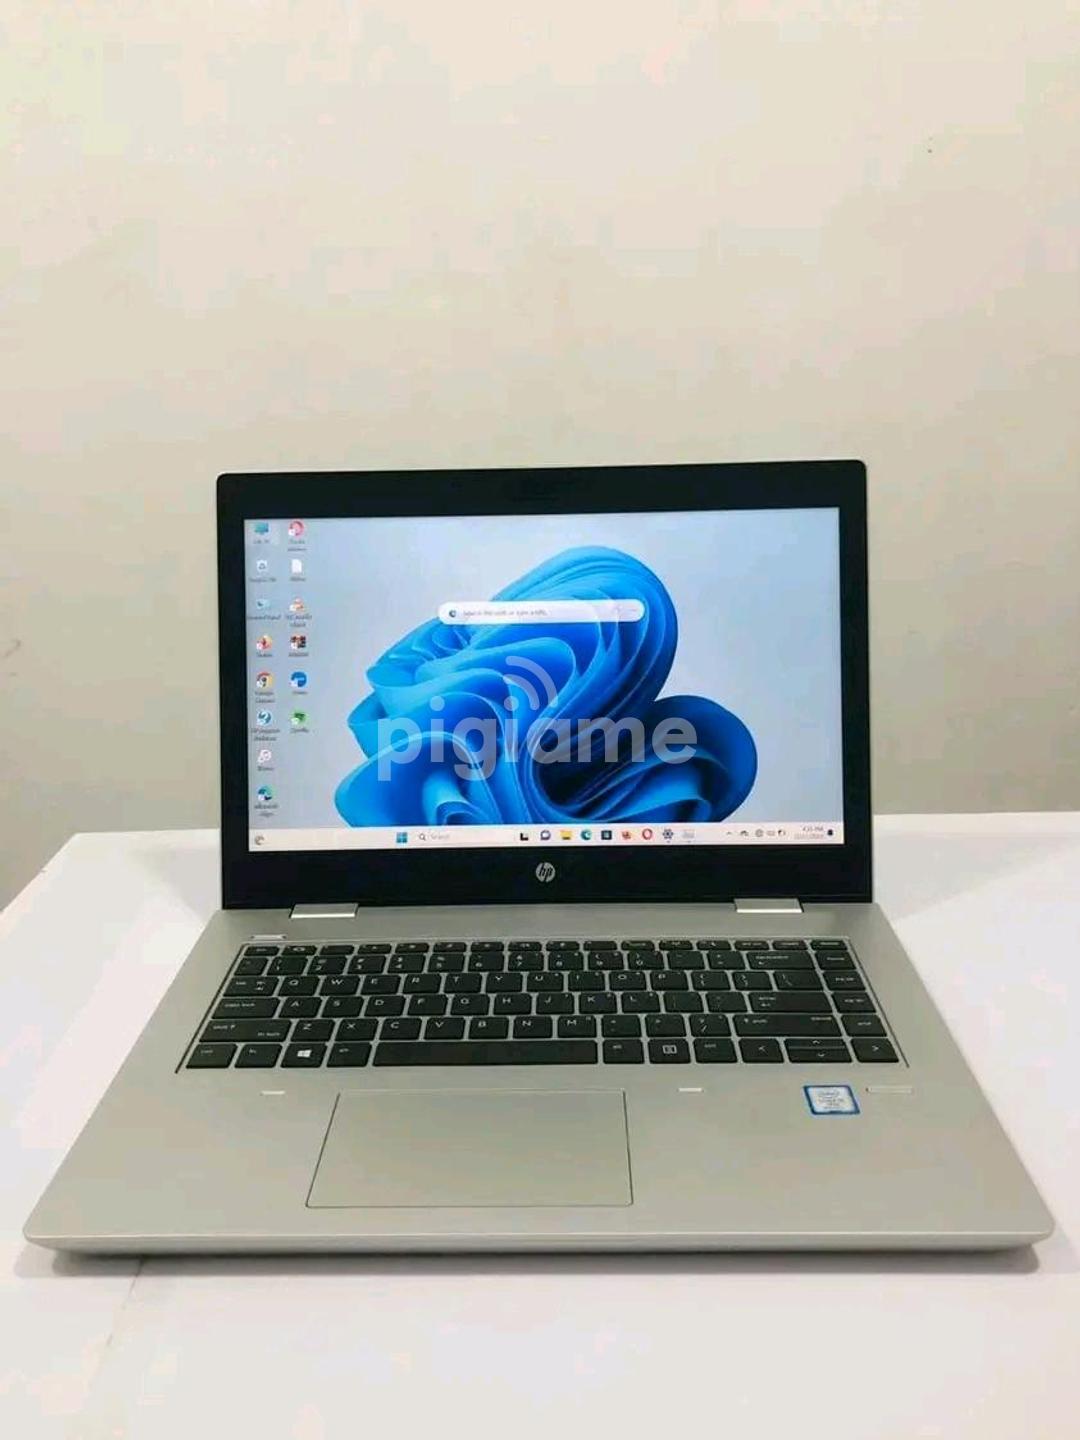 HP Probook 640 G4 i5 8th Generation Laptop